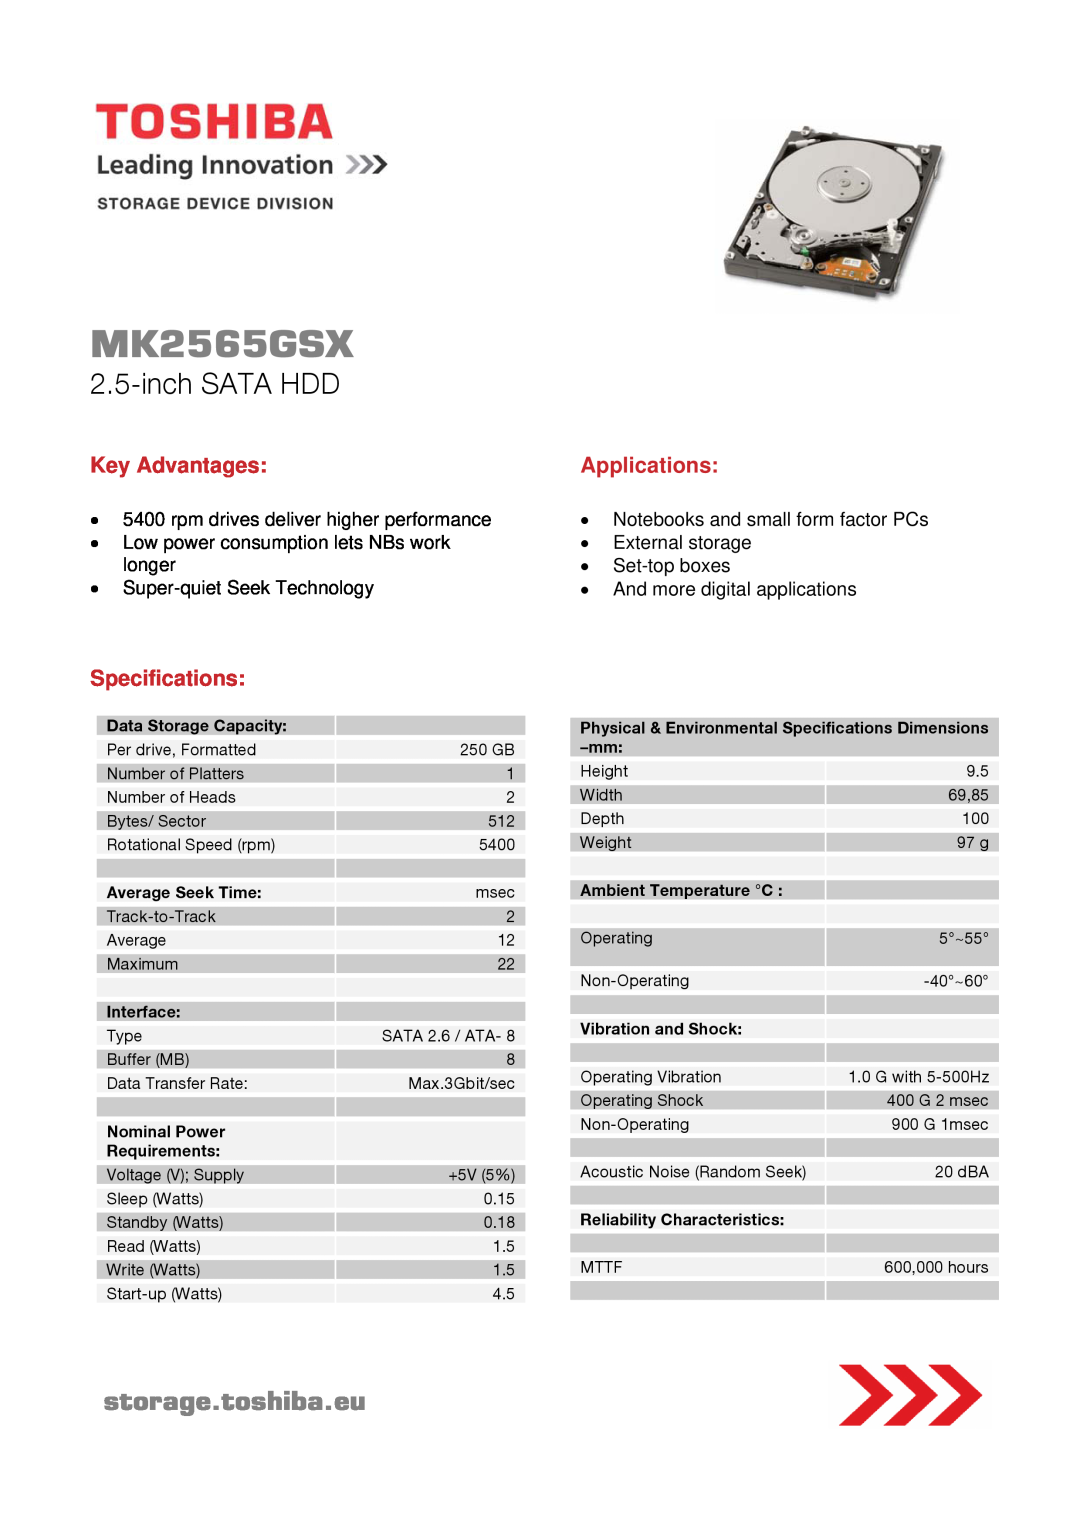 Toshiba MK2565GSX specifications inch SATA HDD, storage.toshiba.eu, Key Advantages, Applications, Specifications, longer 